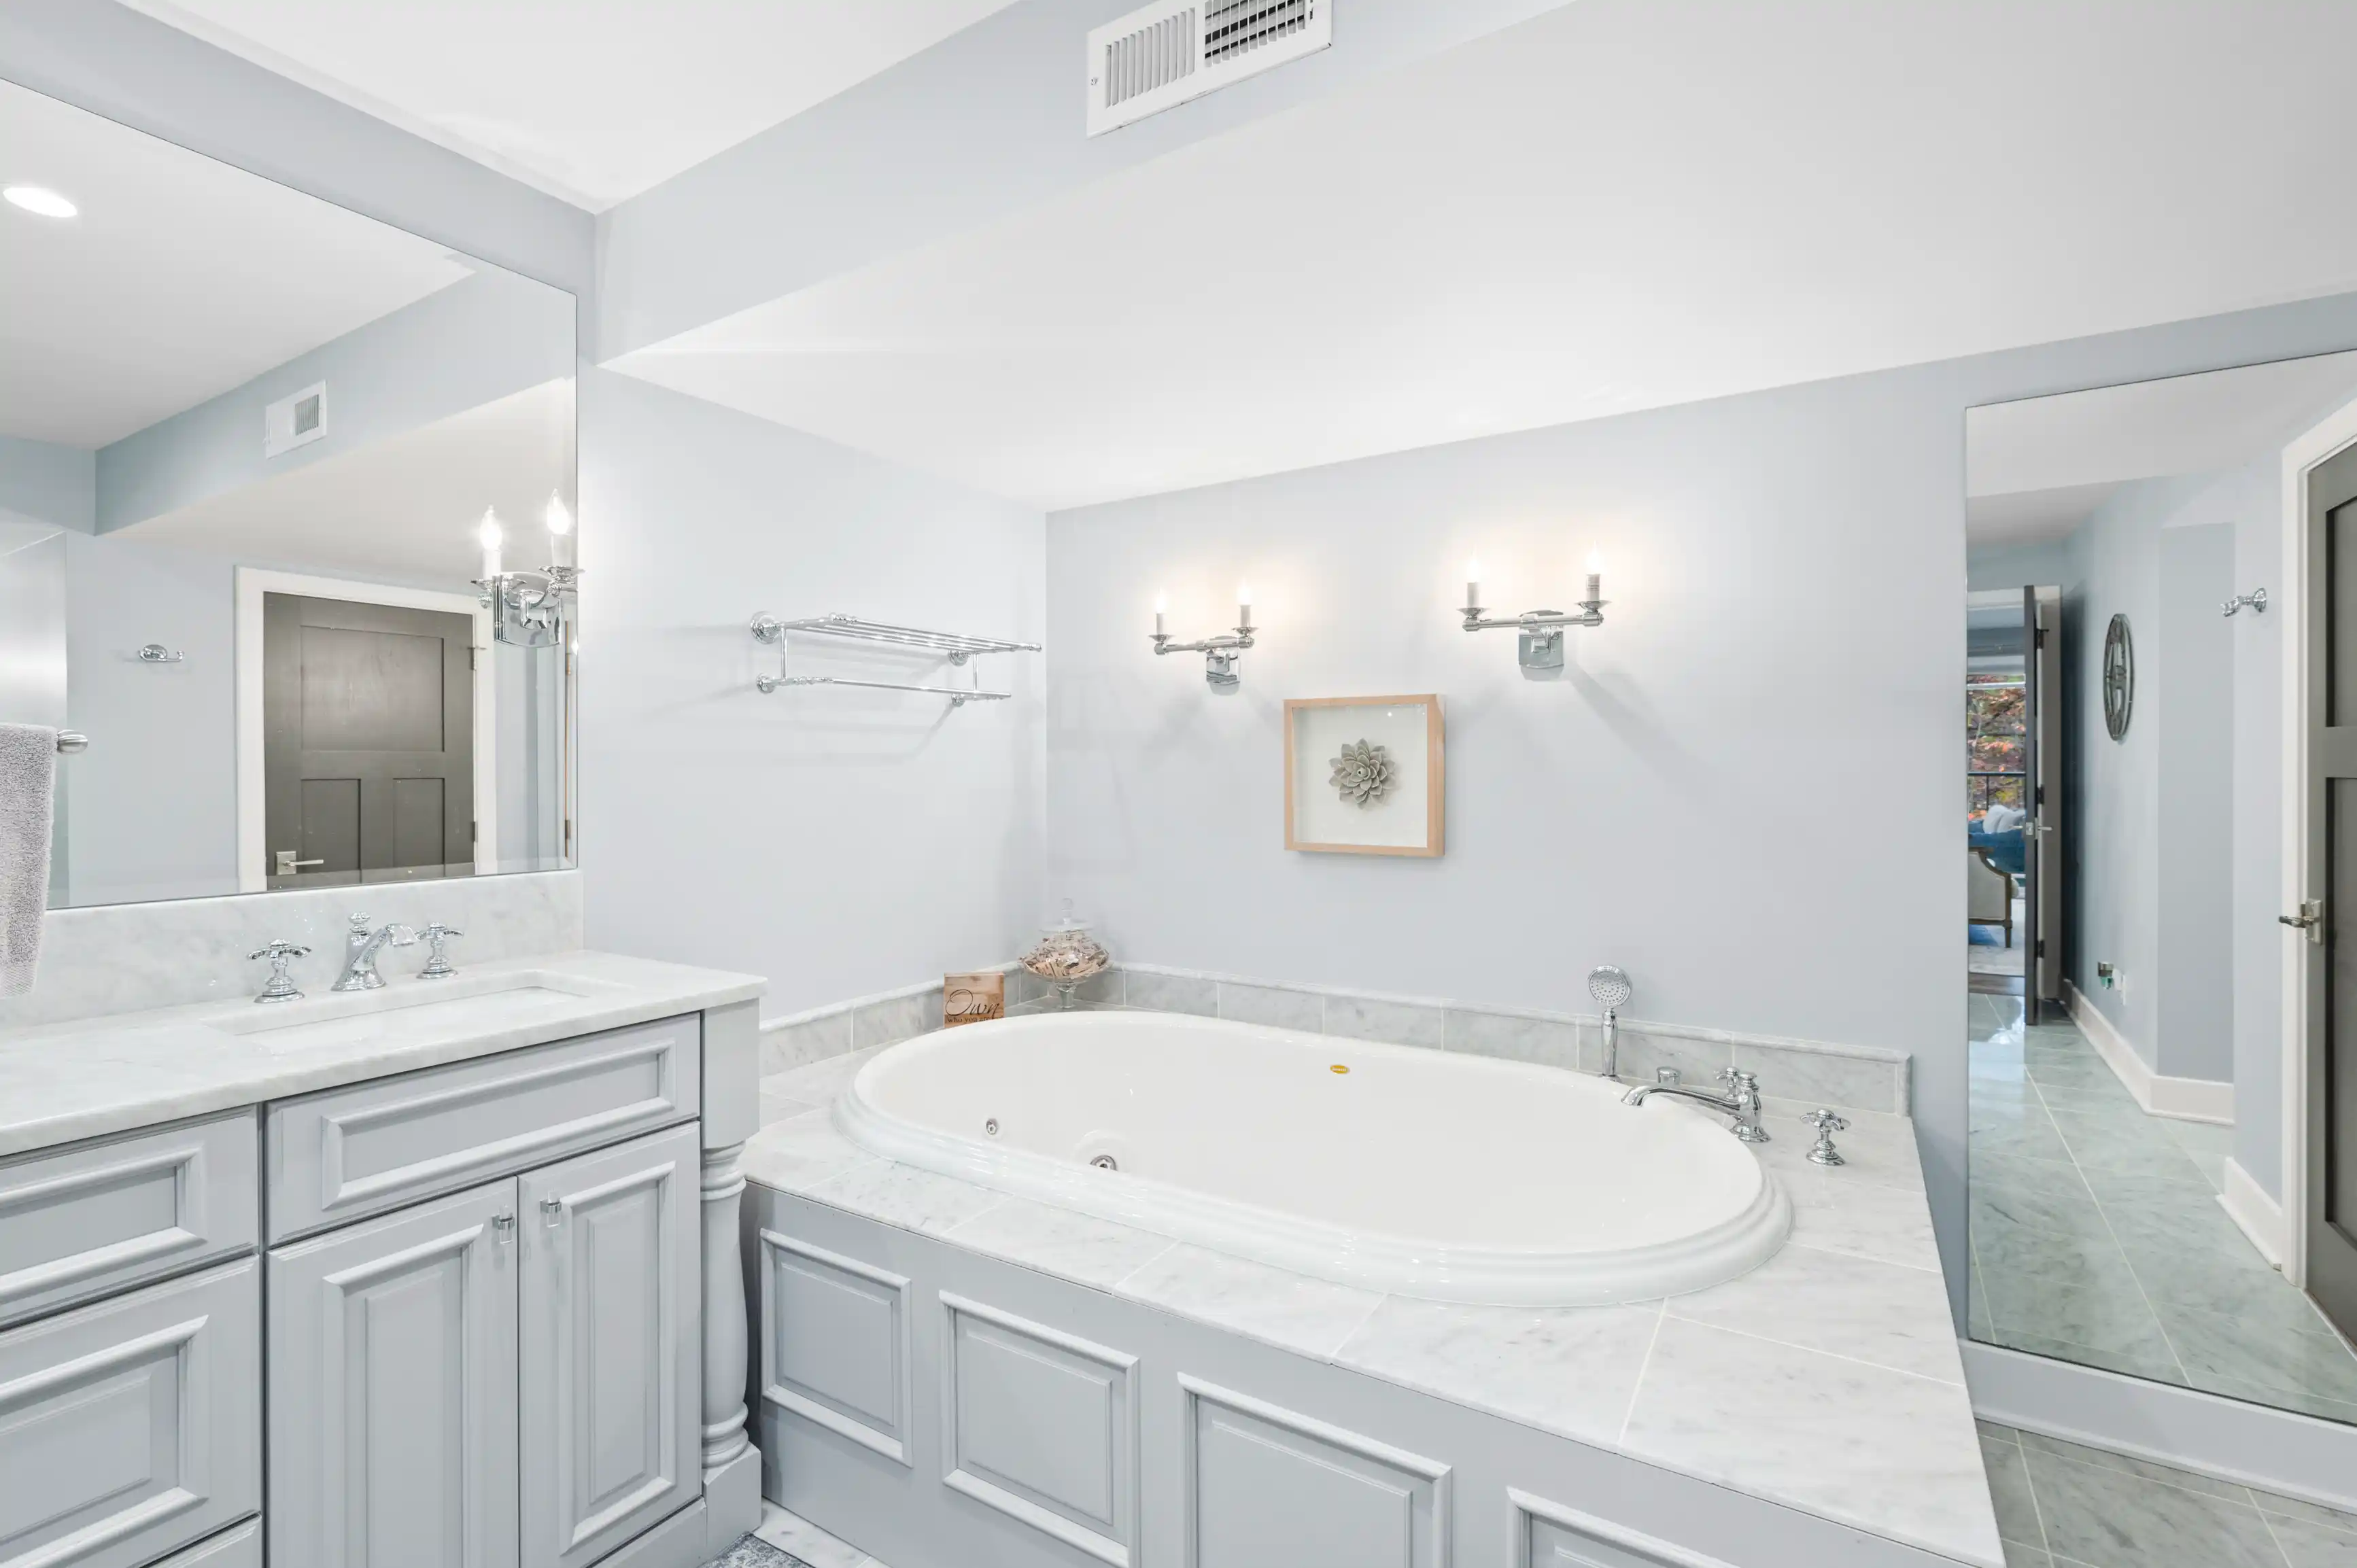 Spacious modern bathroom with large mirror, dual sink vanity, marble countertops, and built-in bathtub.